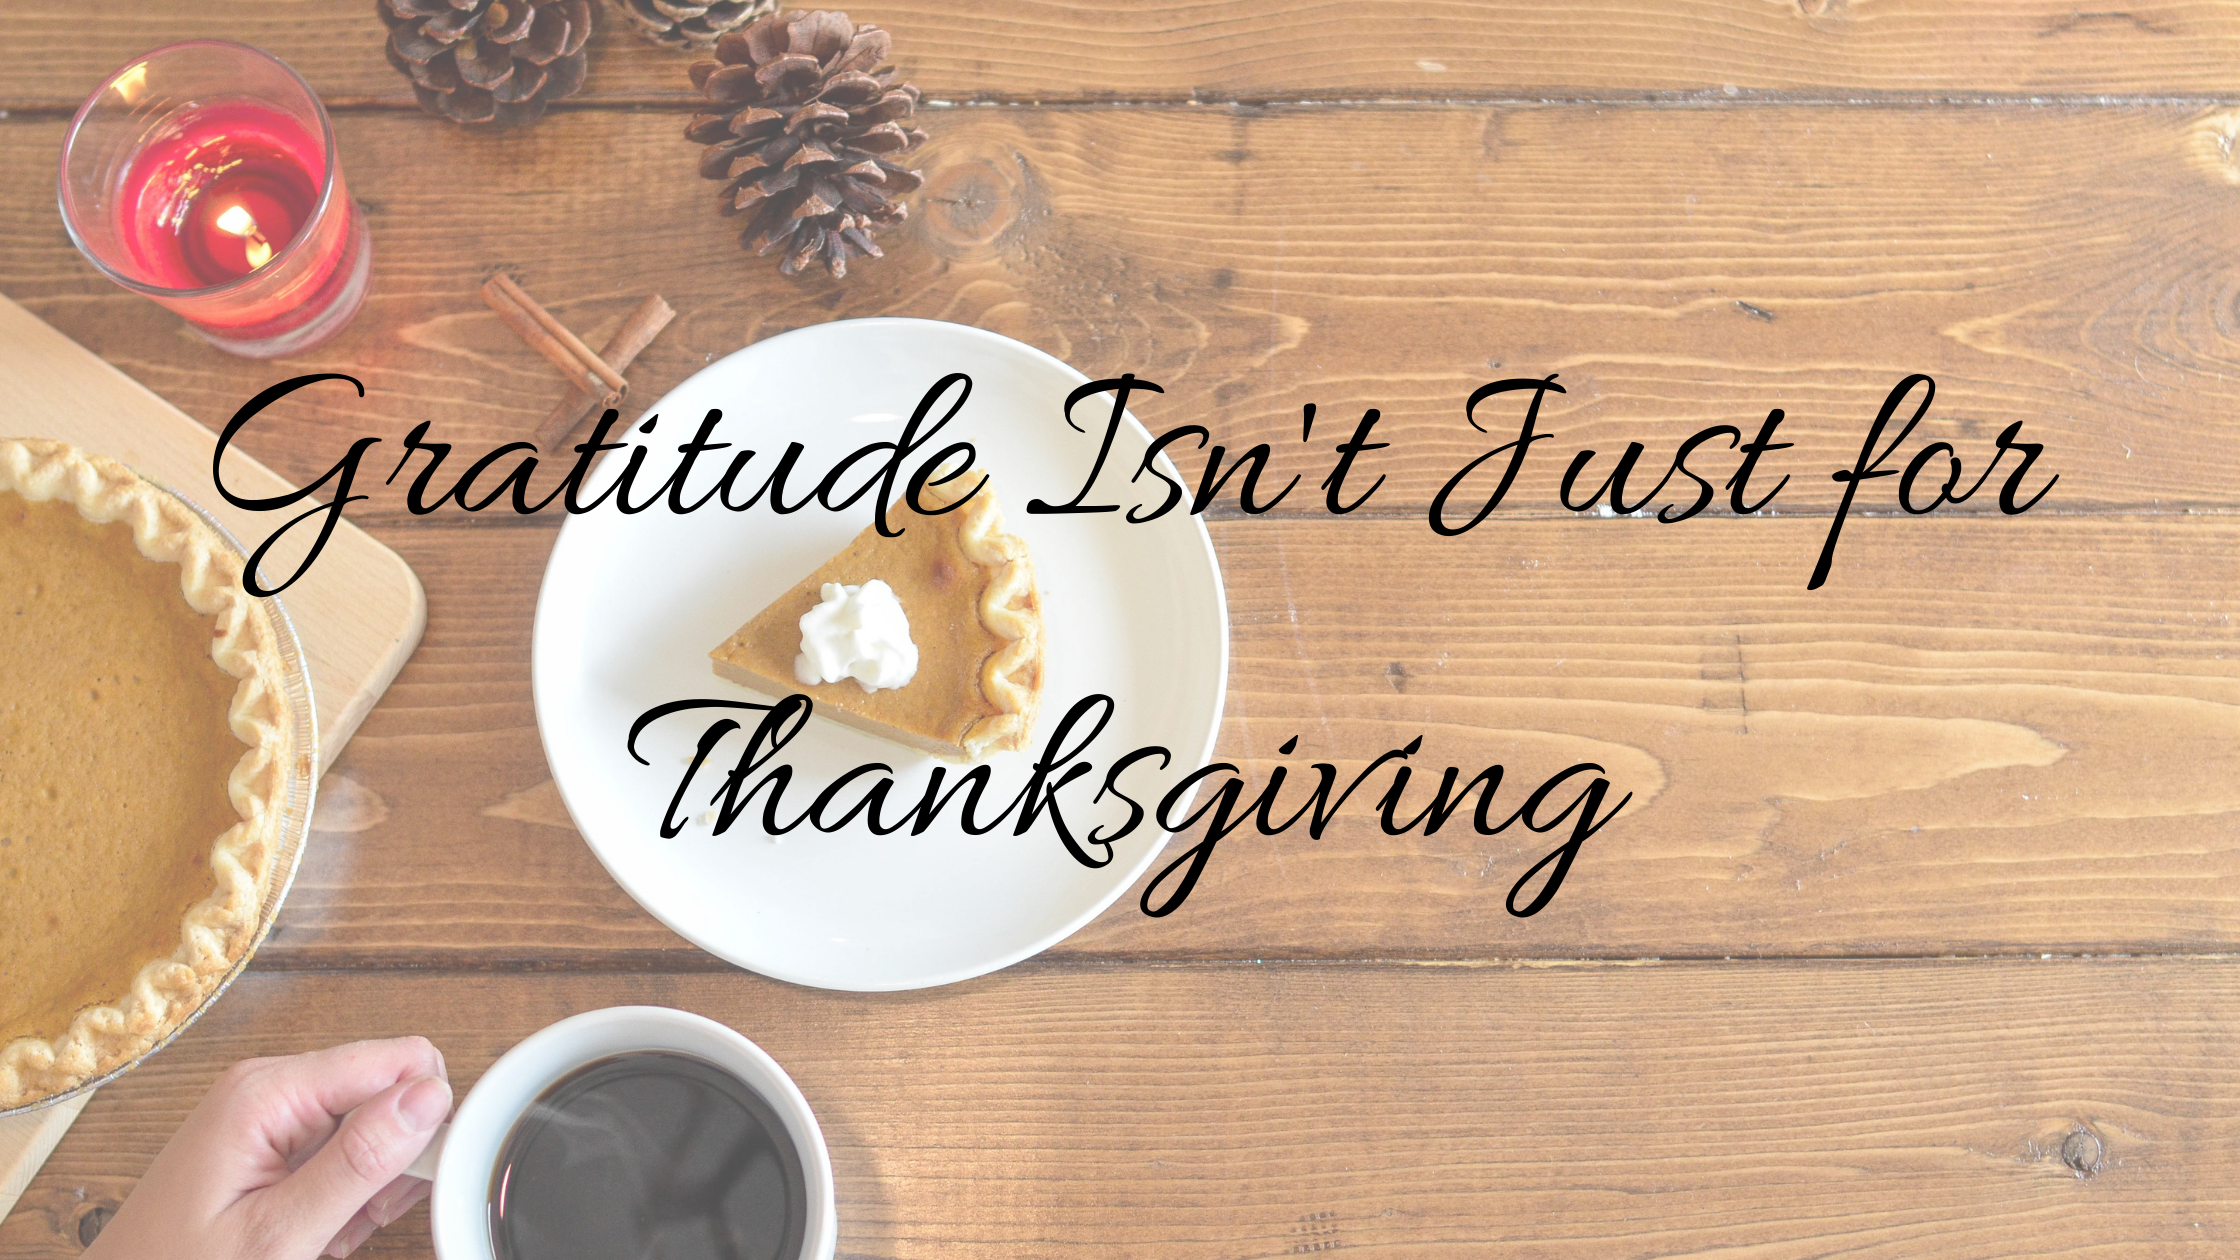 Gratitude Isn't Just for Thanksgiving